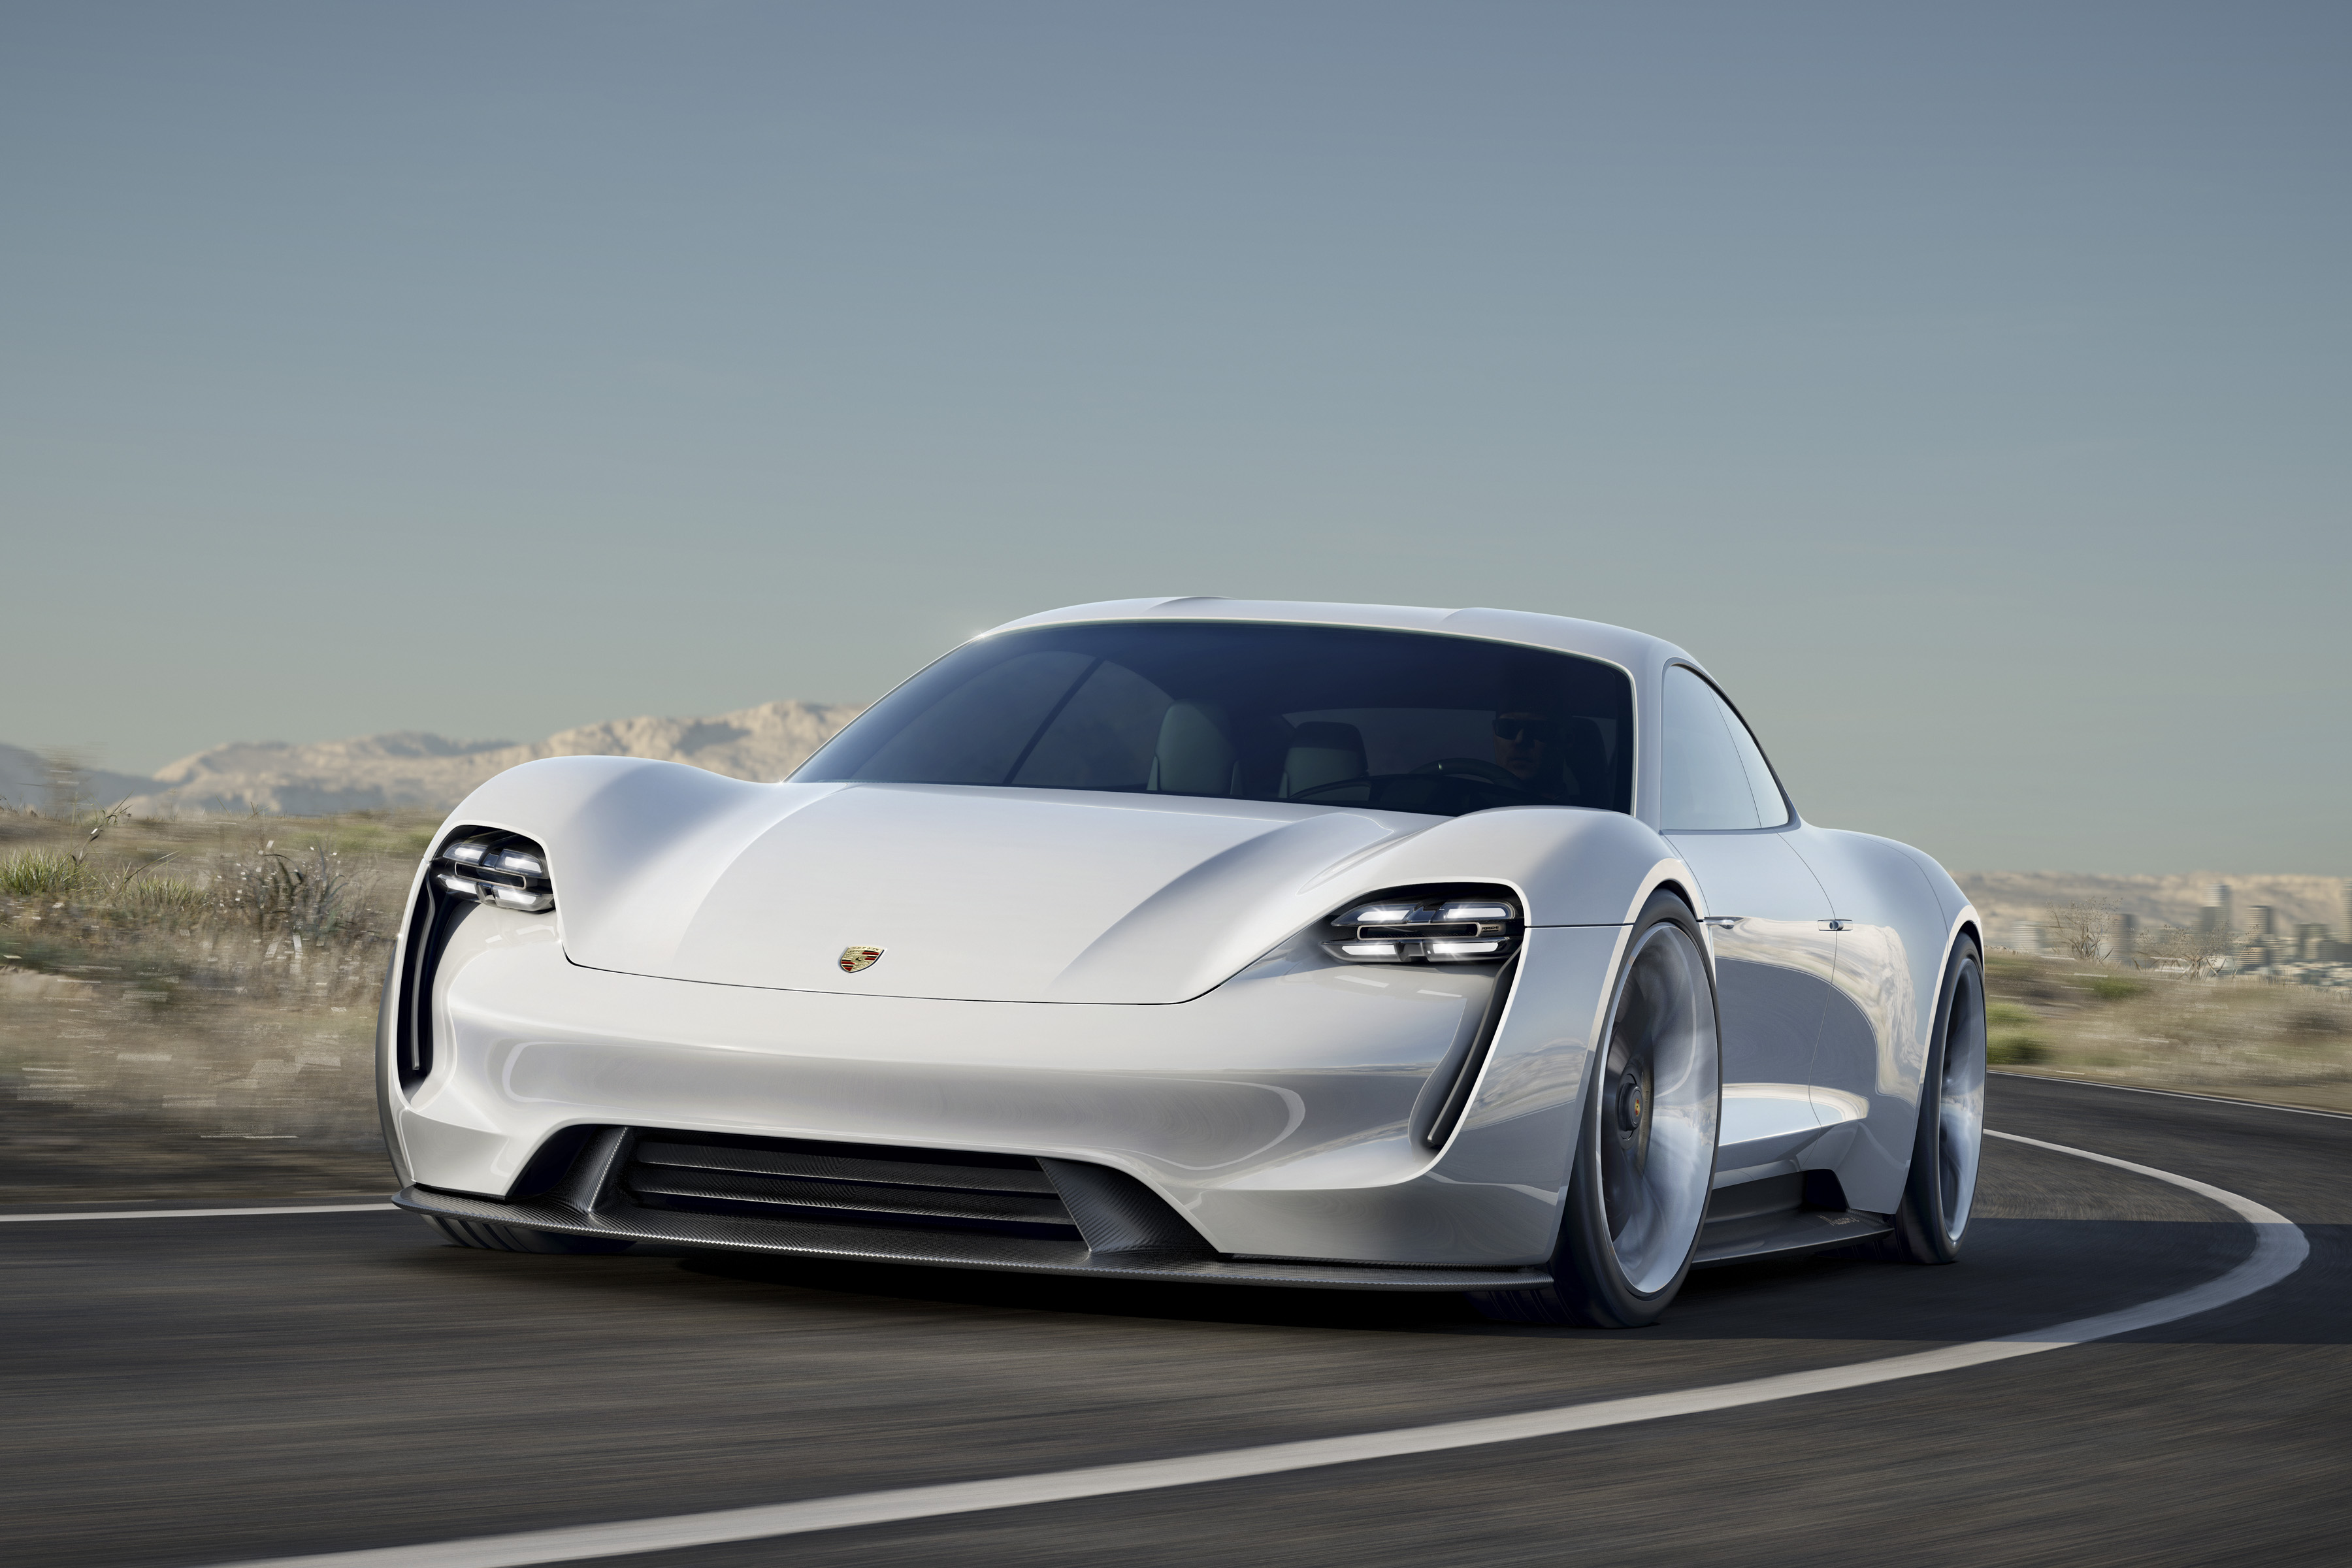 Porsche Ditches Diesel, Focuses on Electrification